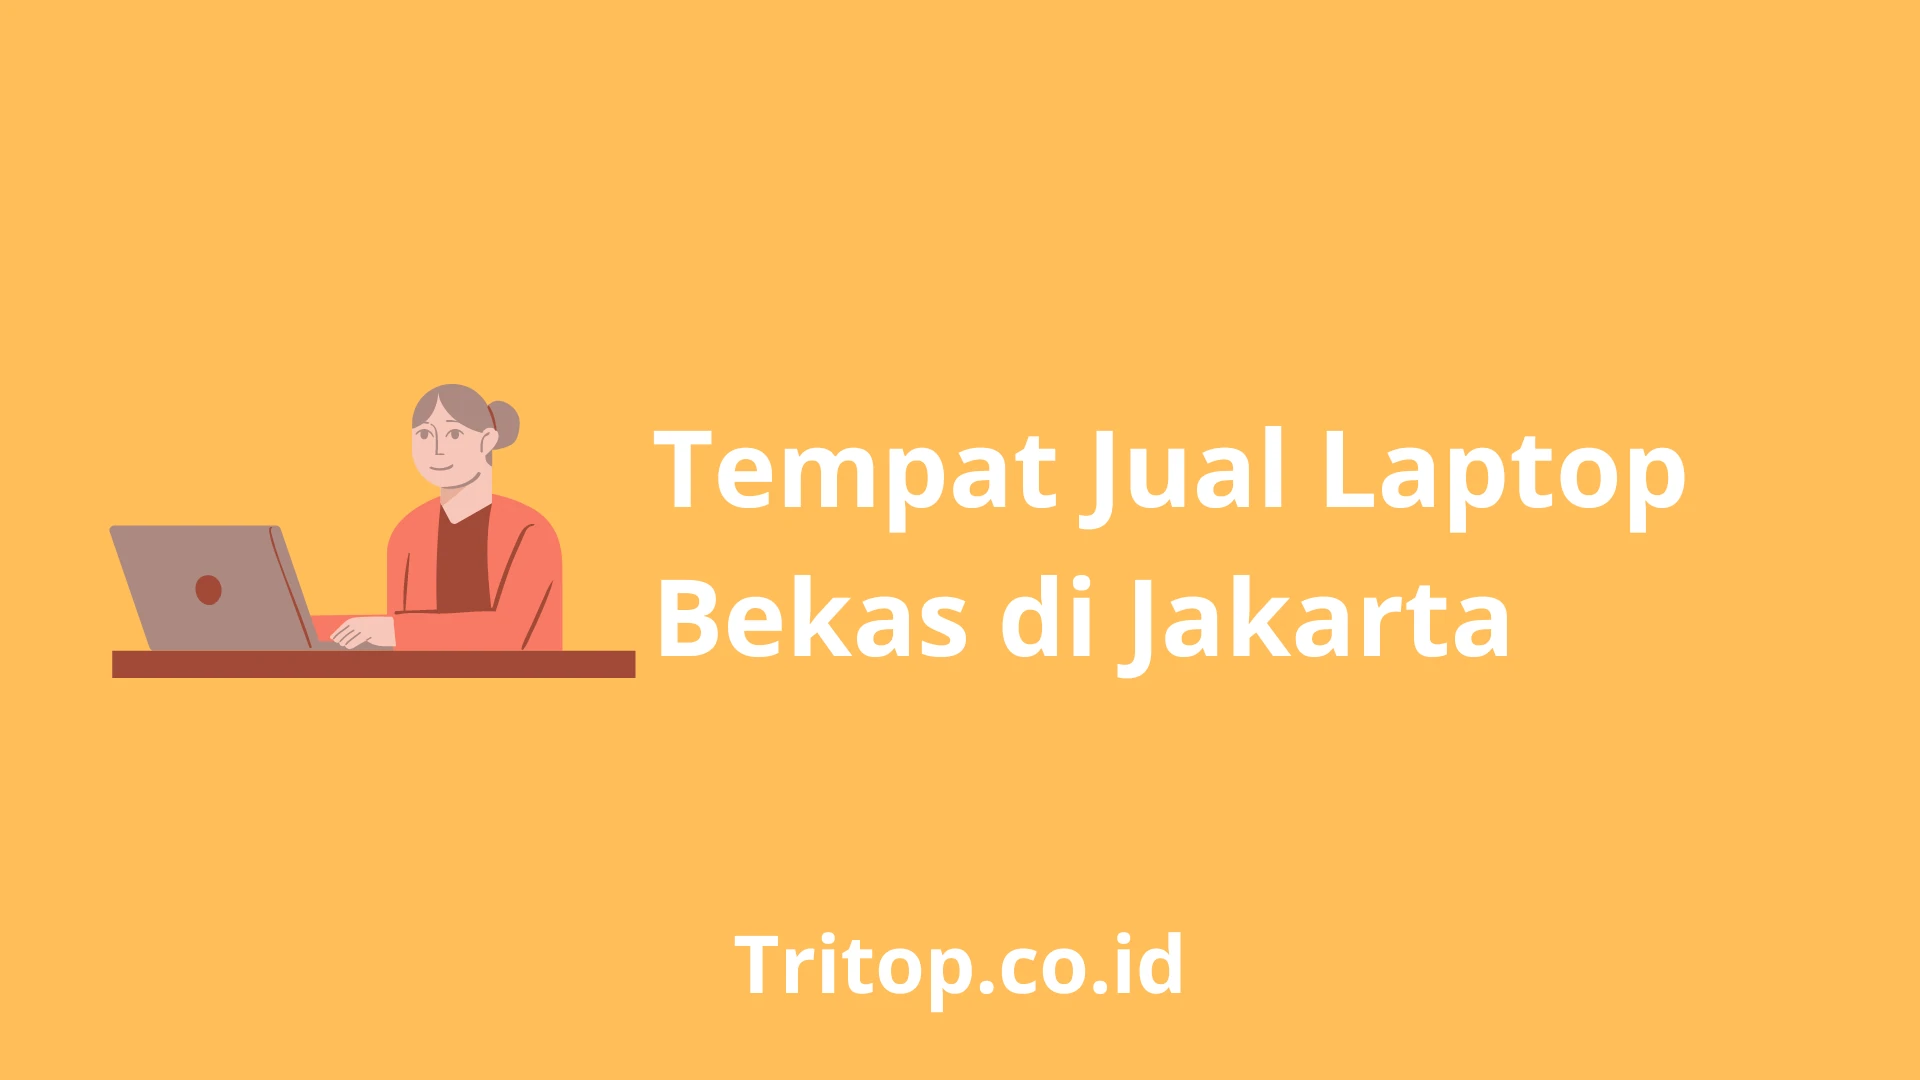 Tempat Jual Laptop Bekas di Jakarta tritop.co.id